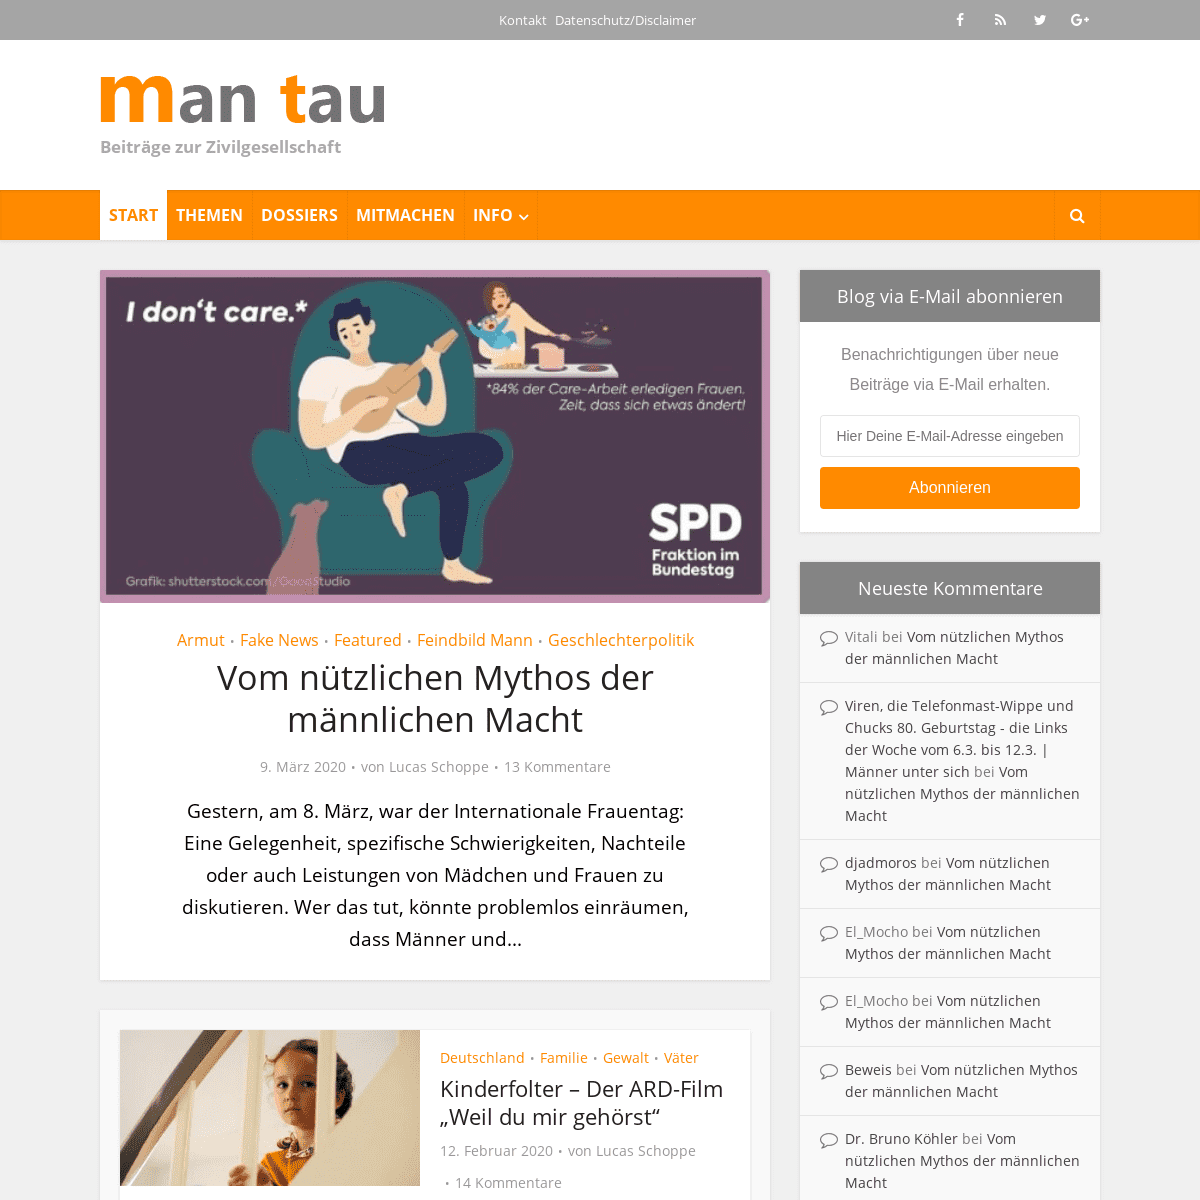 A complete backup of man-tau.com